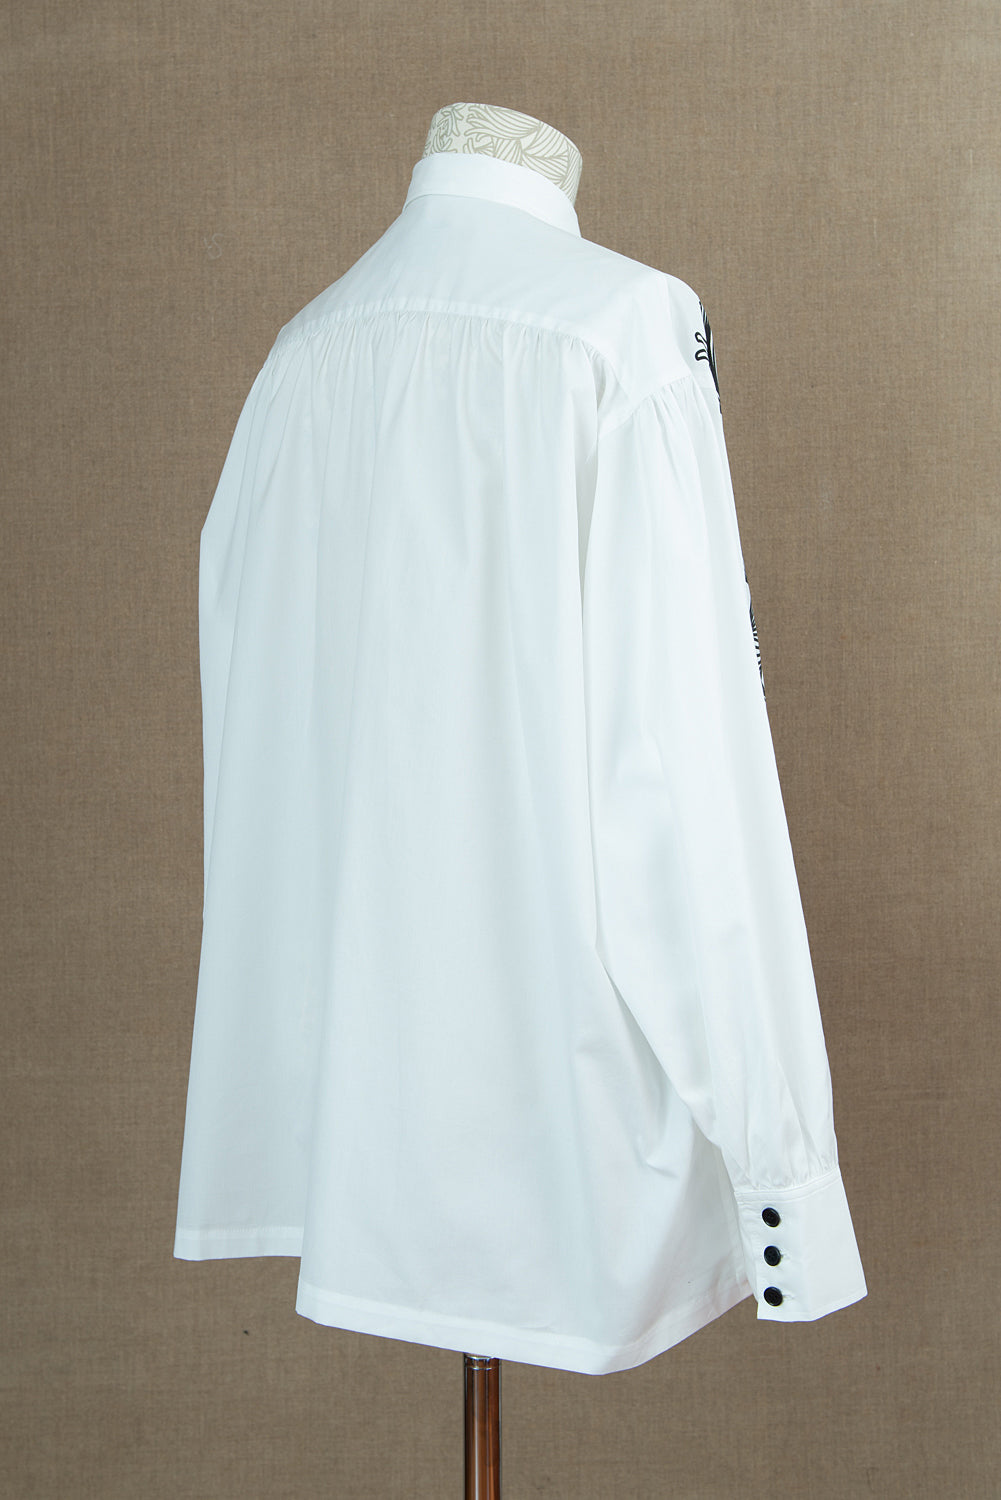 Shirt 18752- Cotton100% Broad Print- 42S Pattern Rope- White